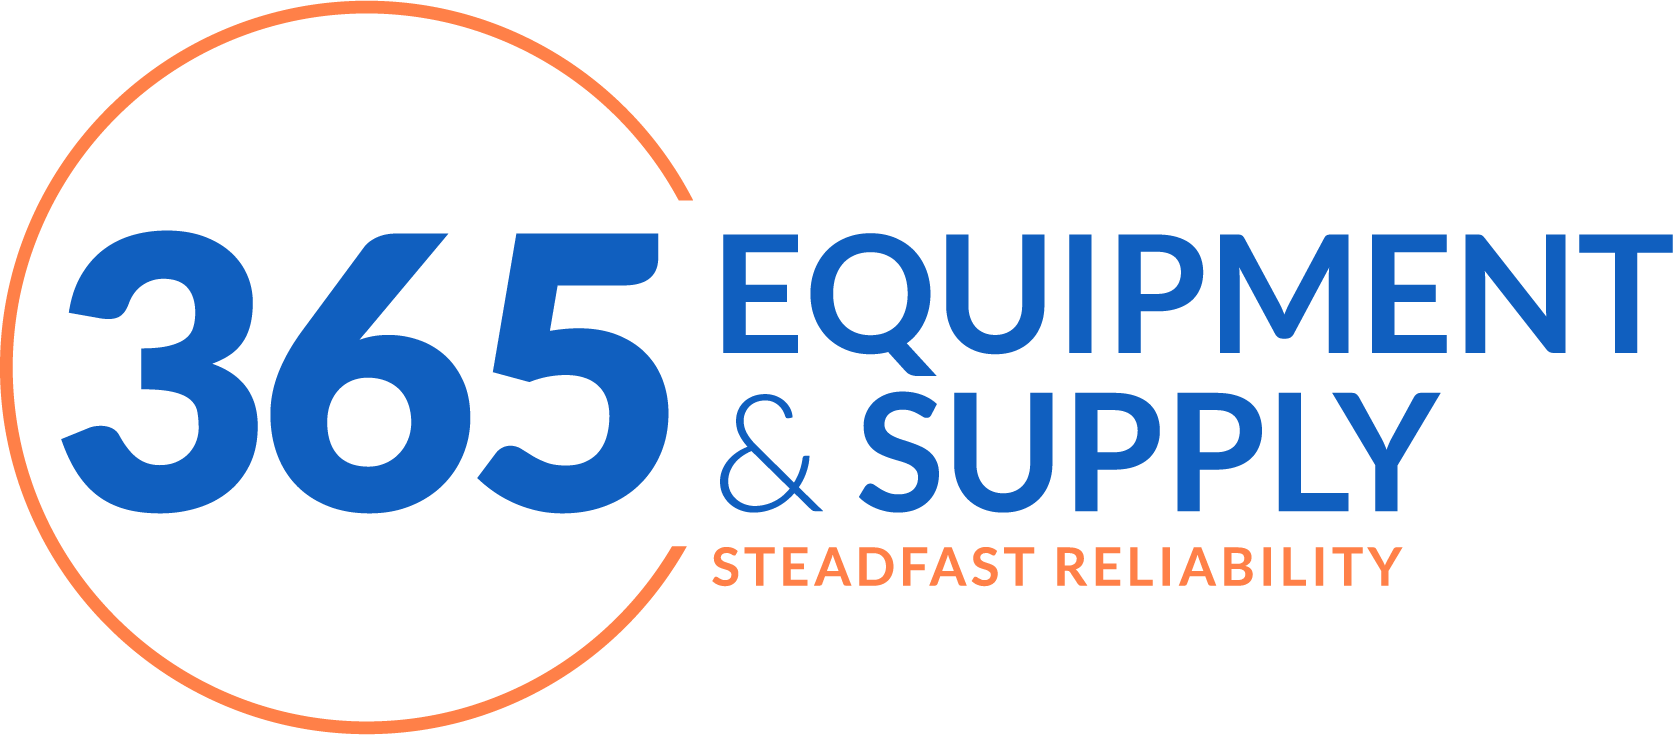 Since 2015, 365 Equipment & Supply